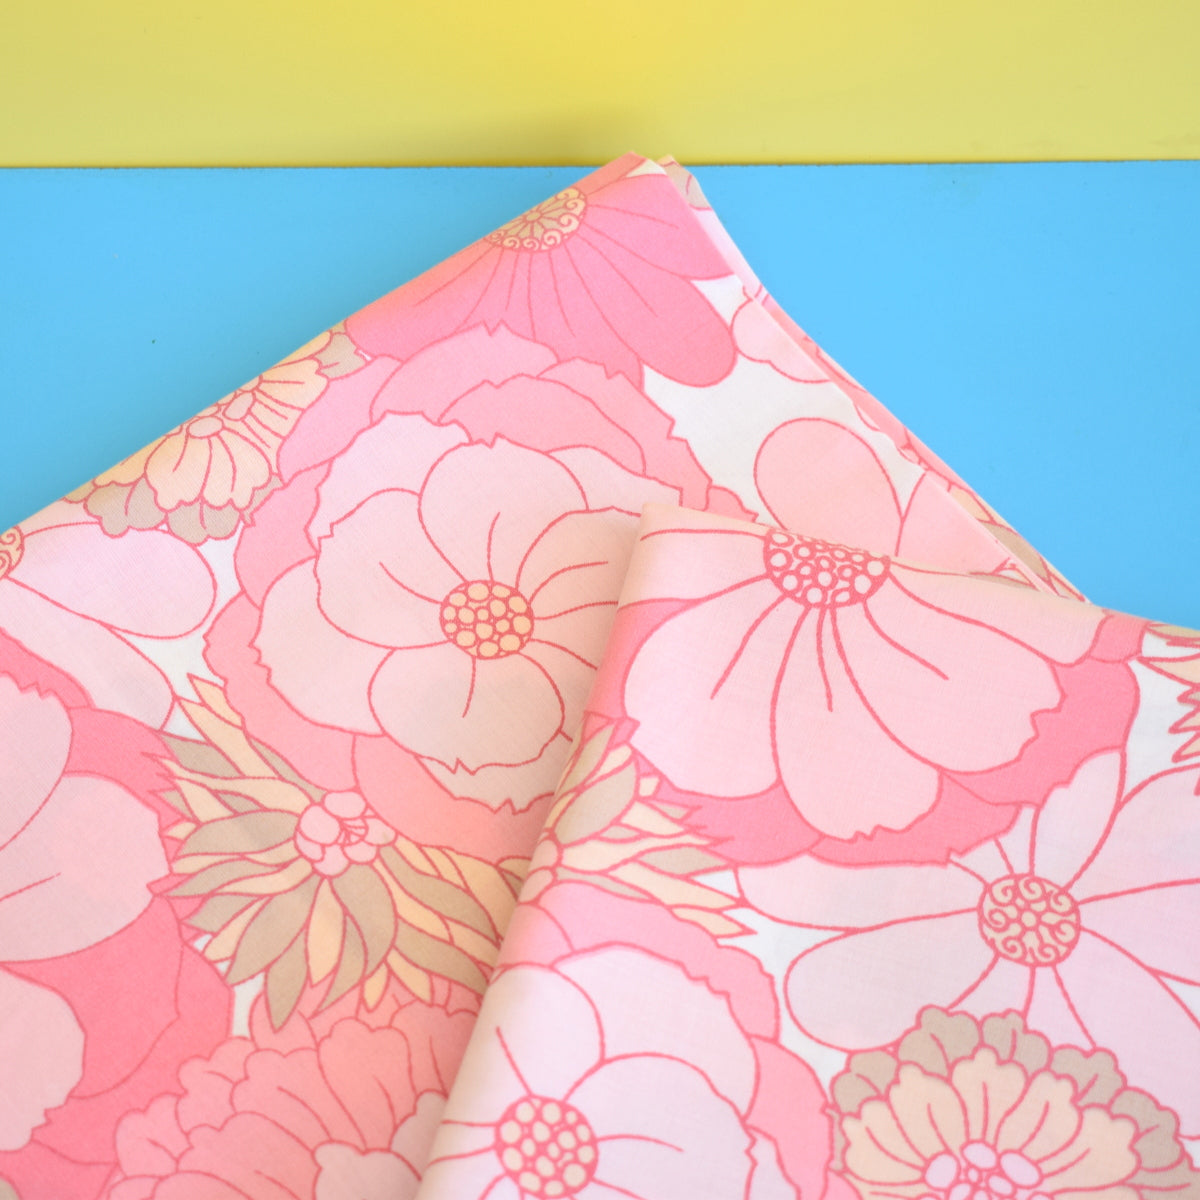 Vintage 1960s Pillow Cases (Pair) - Flower Power Cotton - Pink